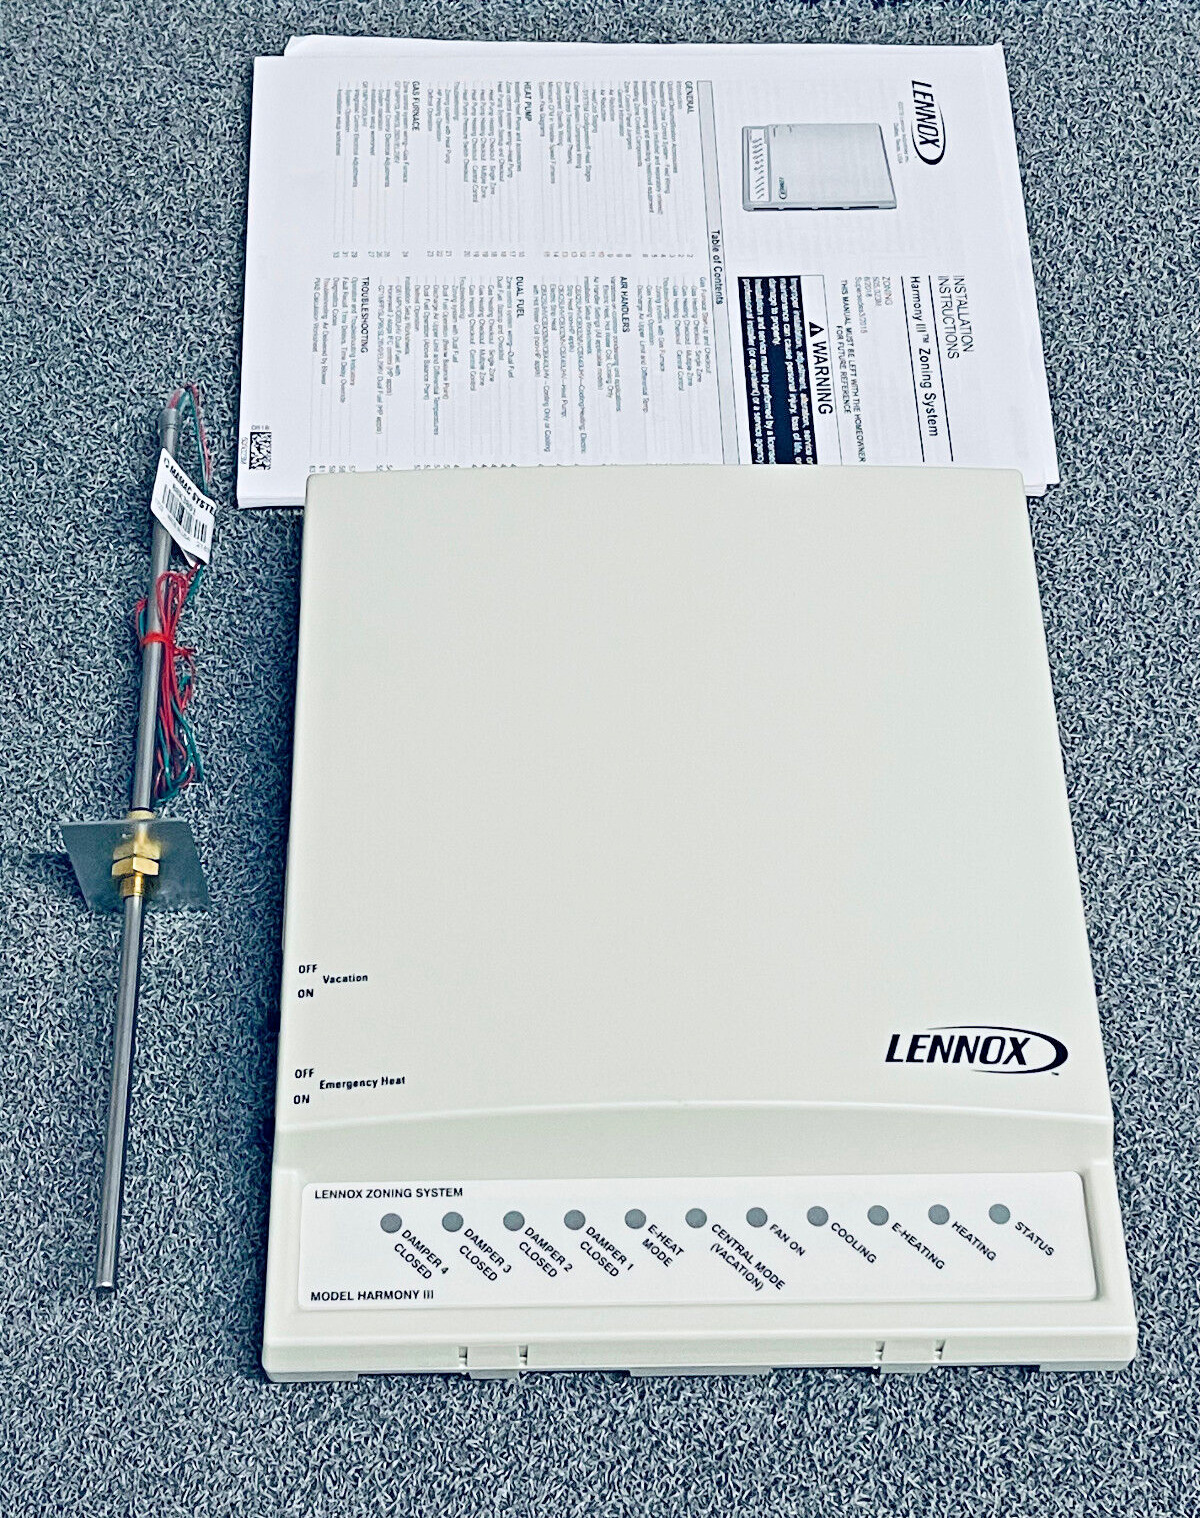 Lennox X9953 Harmony III 4 Zone Control